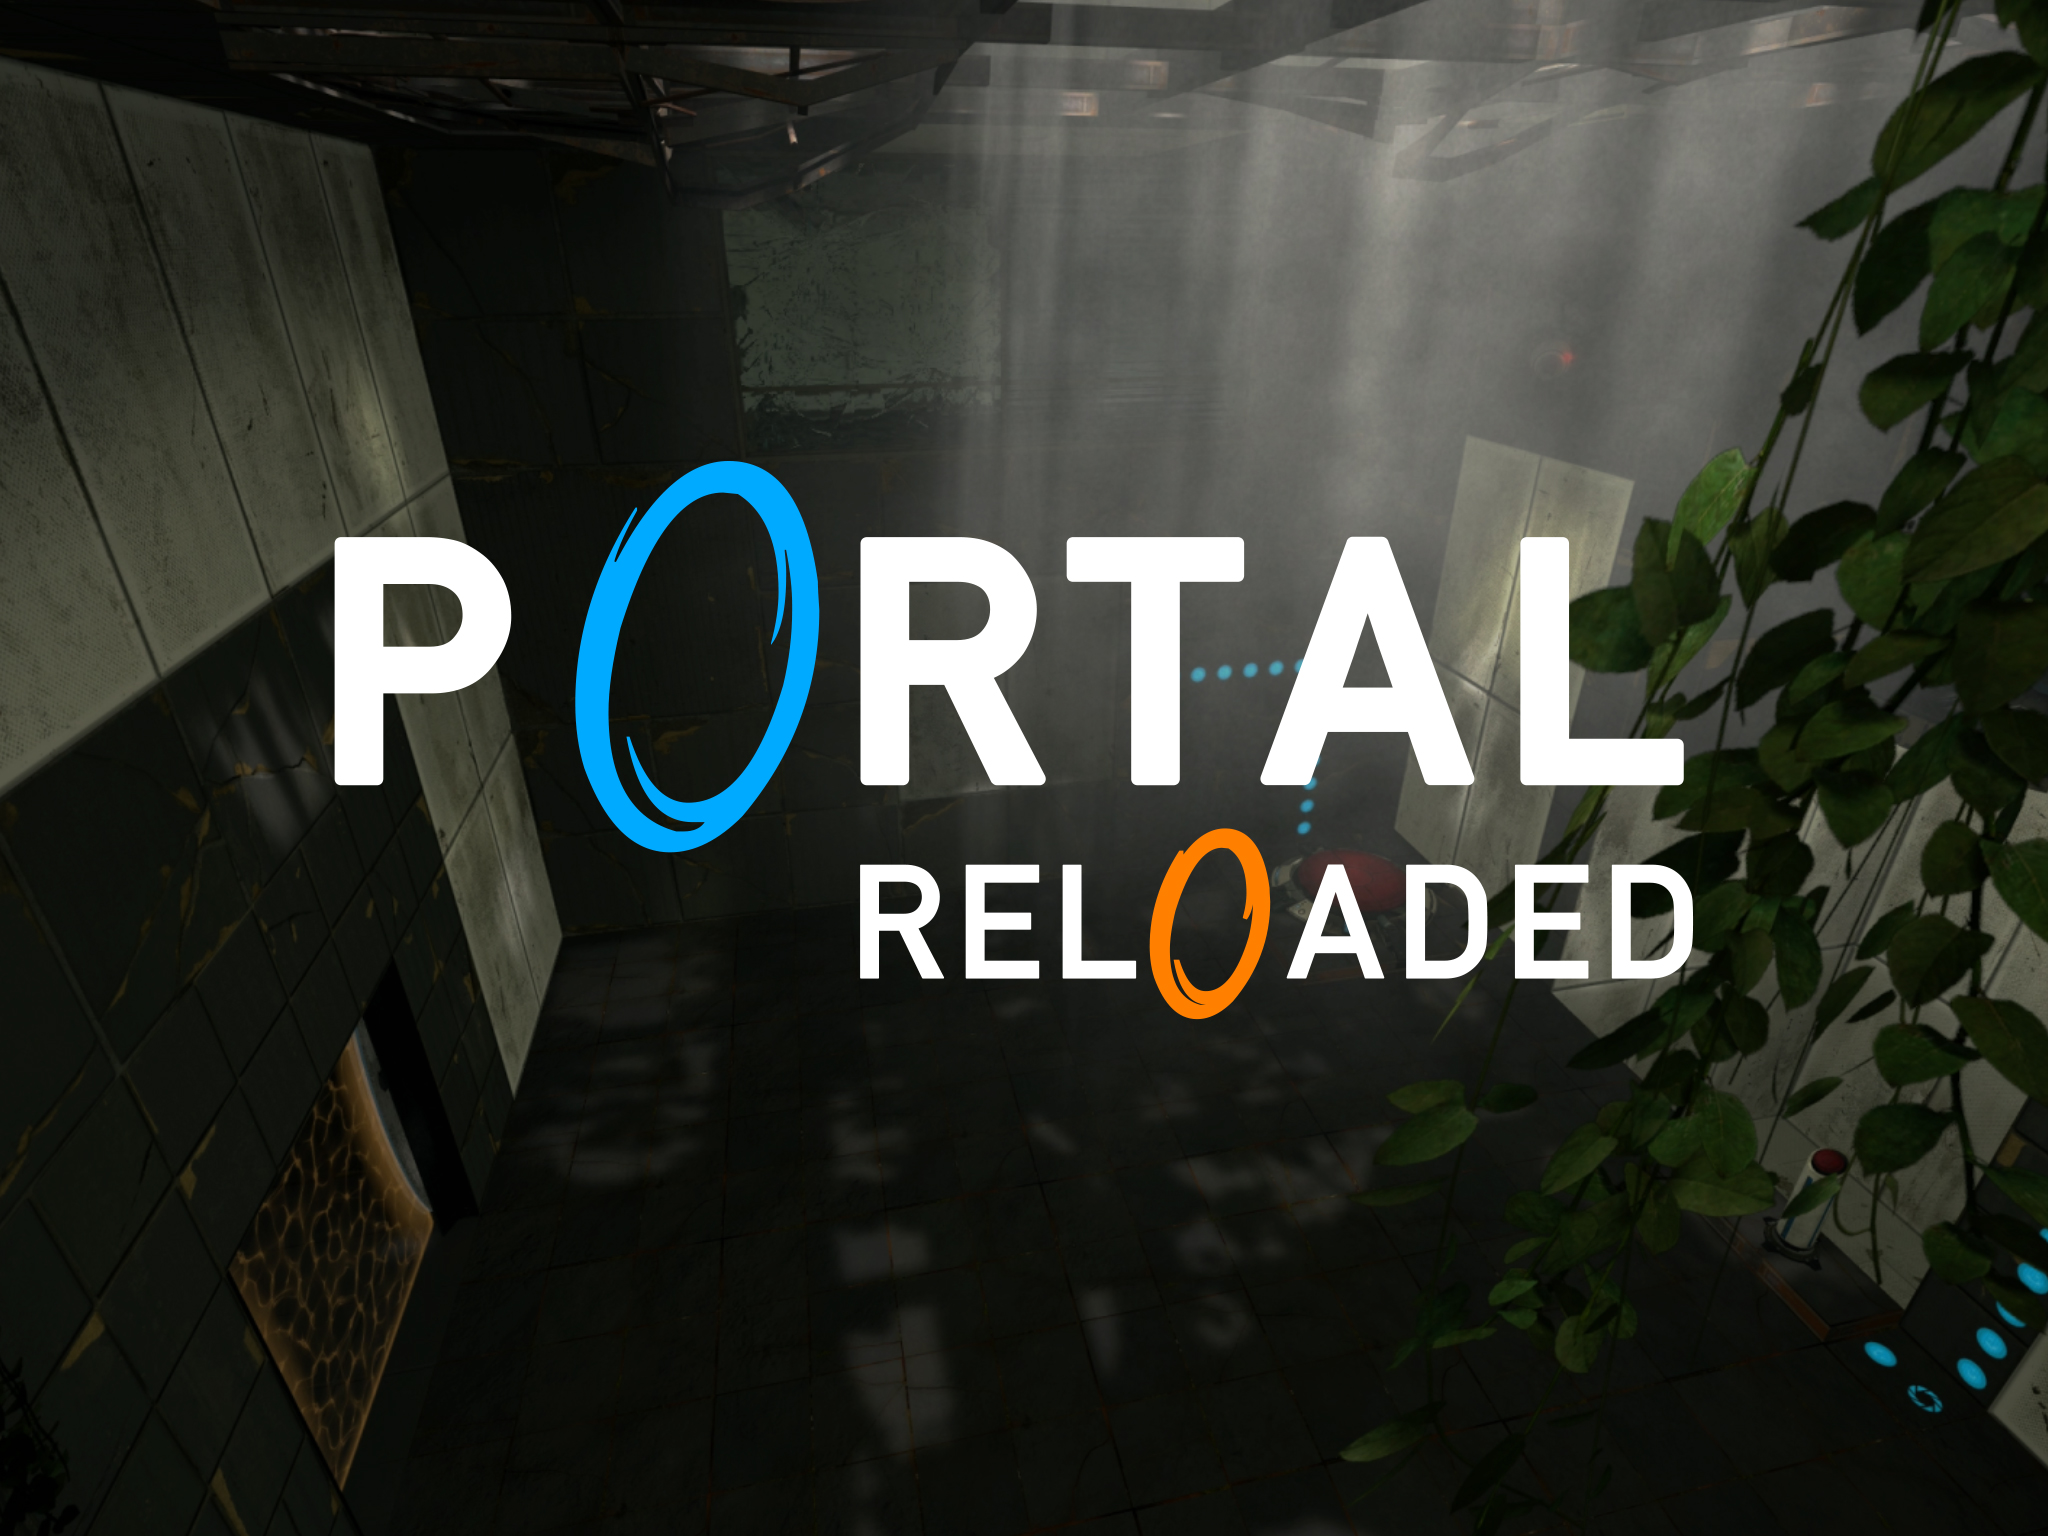 sadasd 4 image - Portal 1.5: The Recration mod for Portal 2 - ModDB